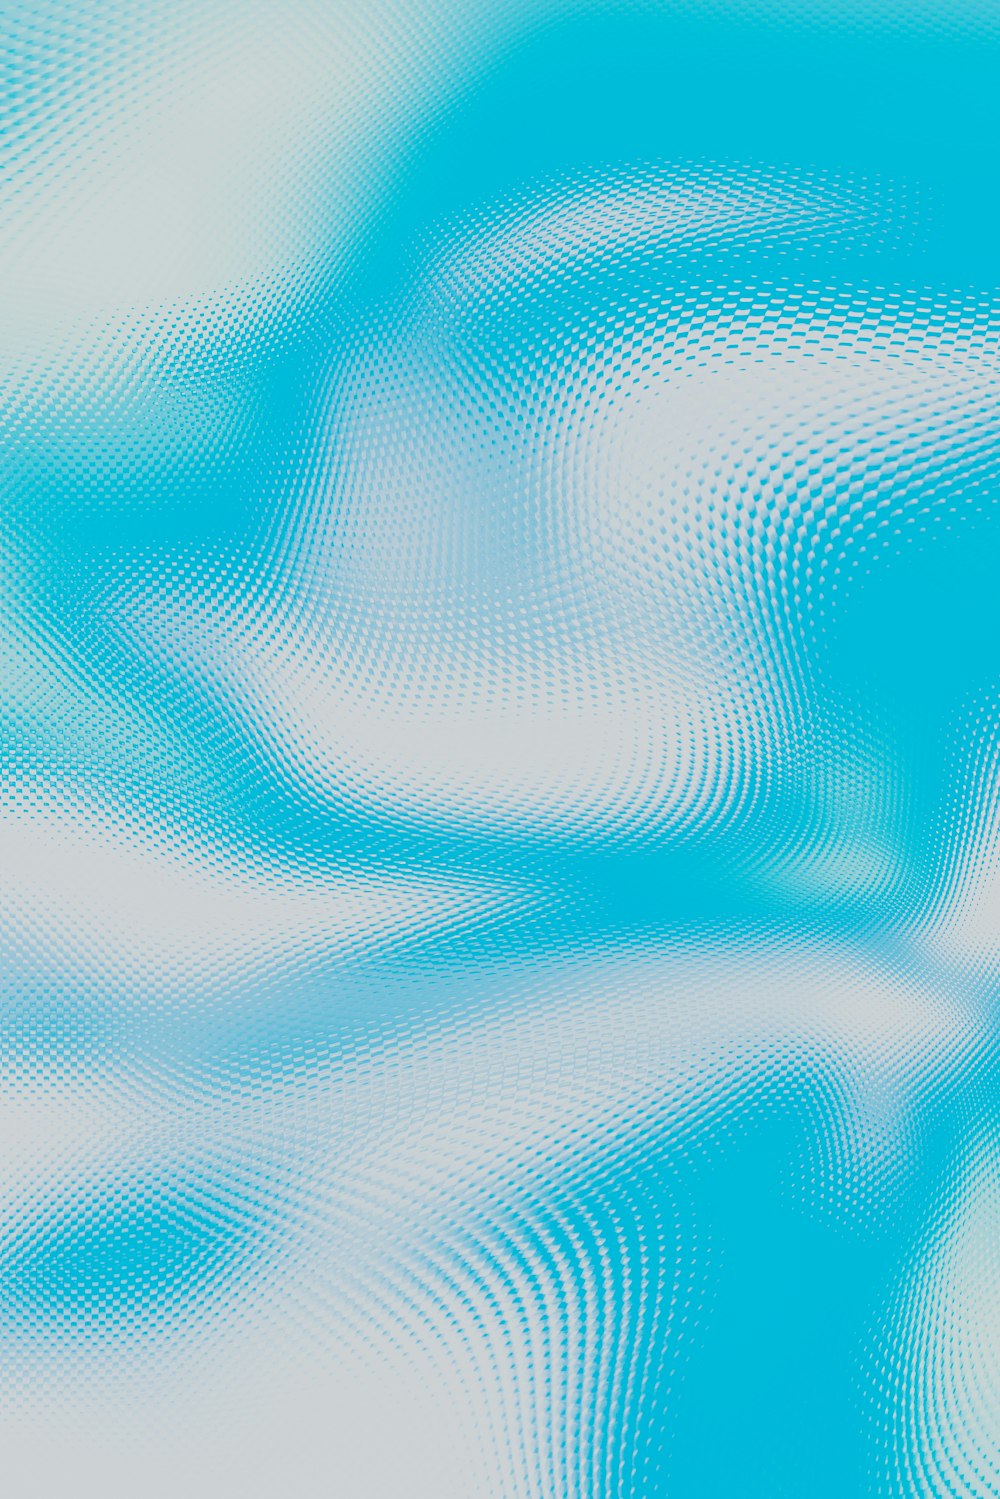 uno sfondo blu e bianco con linee ondulate